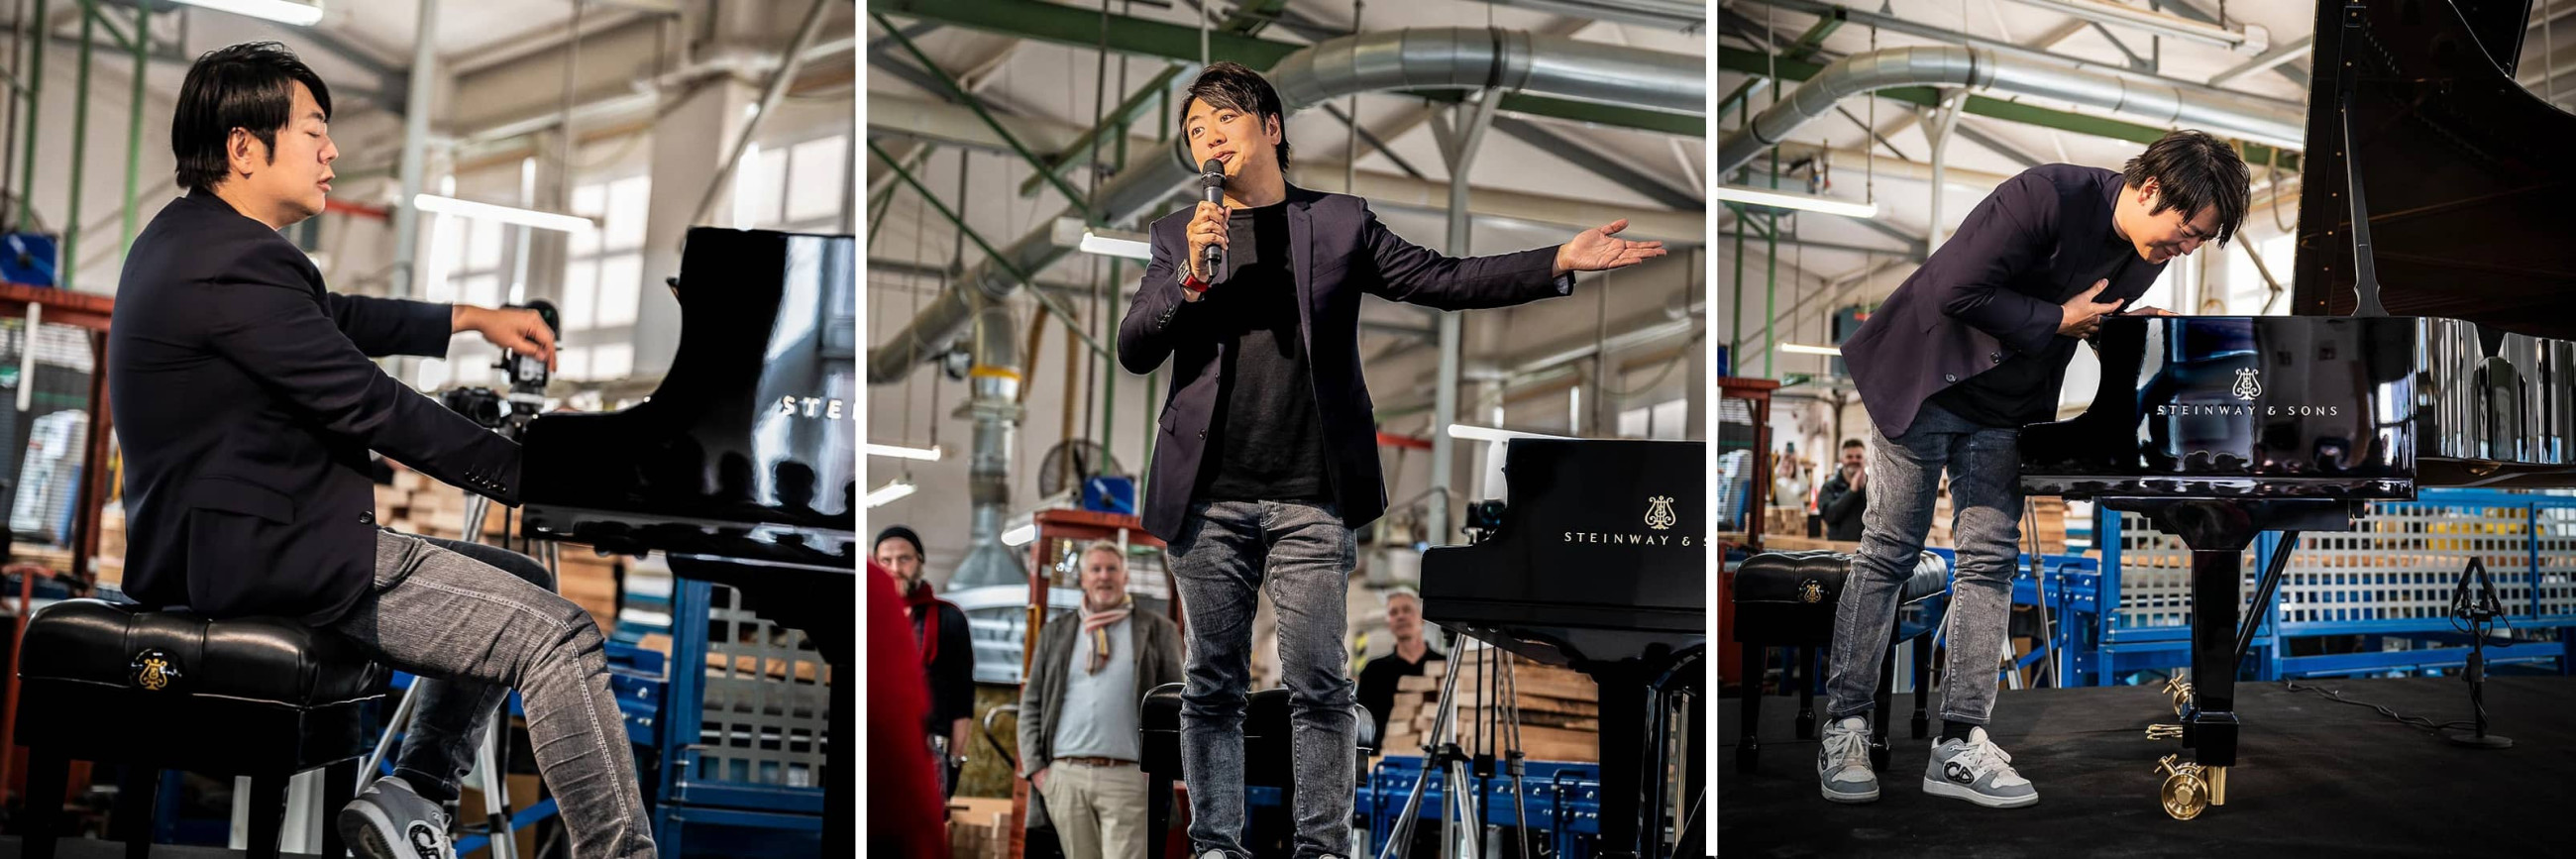 Пианист Ланг Ланг на сцене во время концерта на фабрике Steinway в Гамбурге